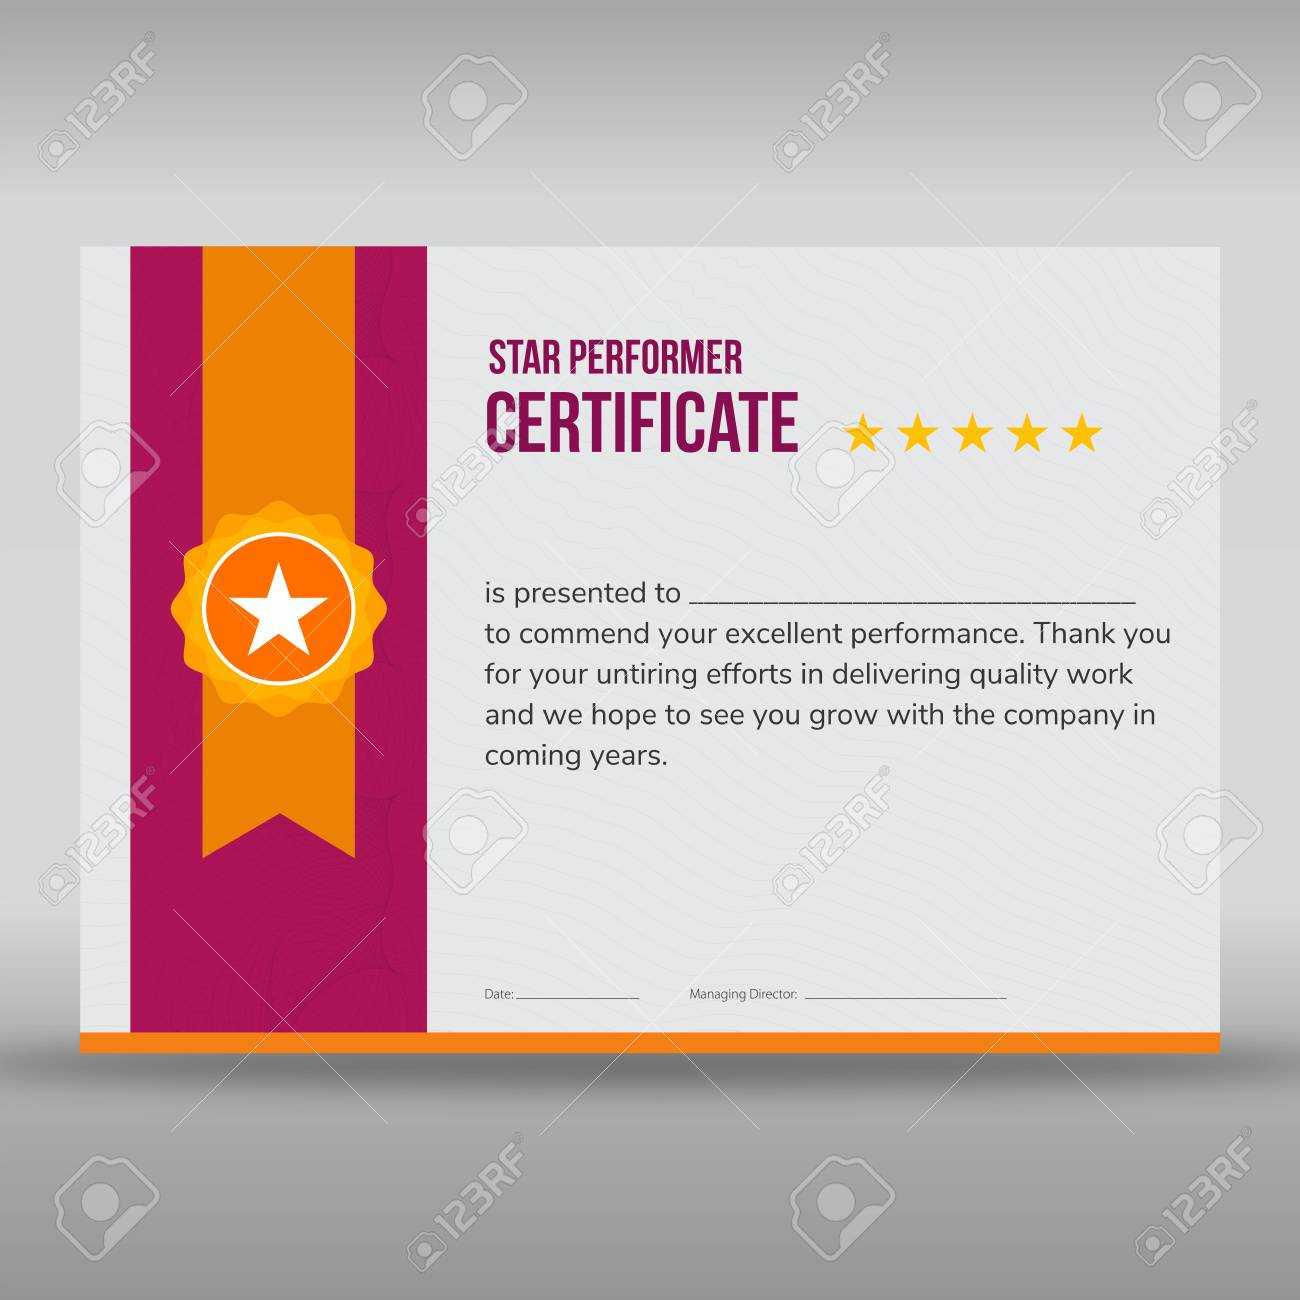 Star Performer Certificate Templates - Karati.ald2014 Throughout Star Performer Certificate Templates